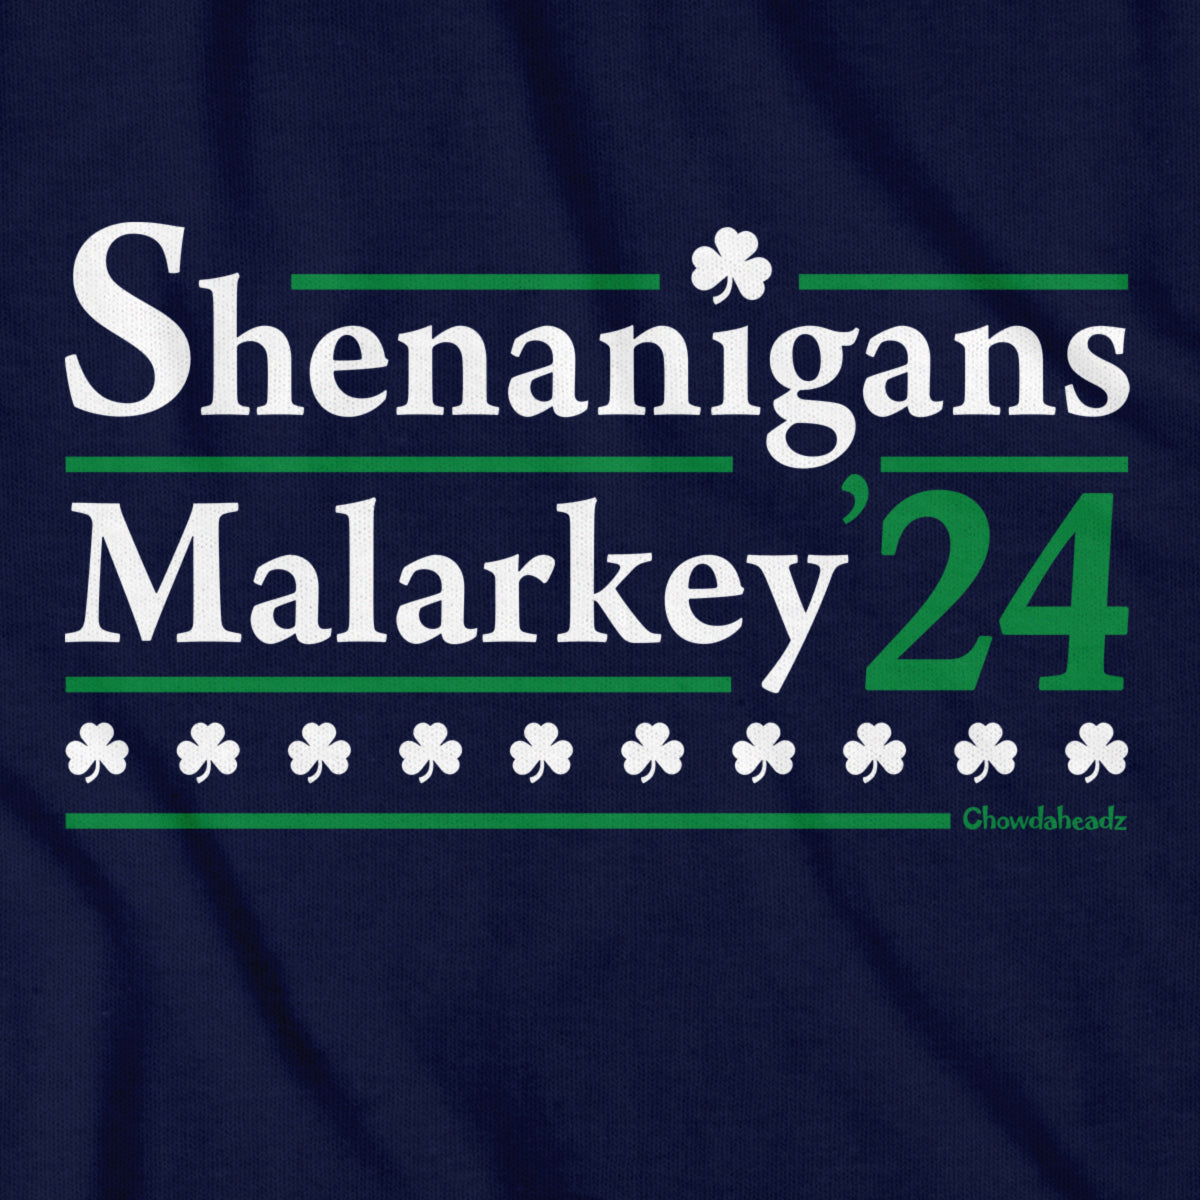 Shenanigans and Malarkey Youth T-Shirt - Chowdaheadz